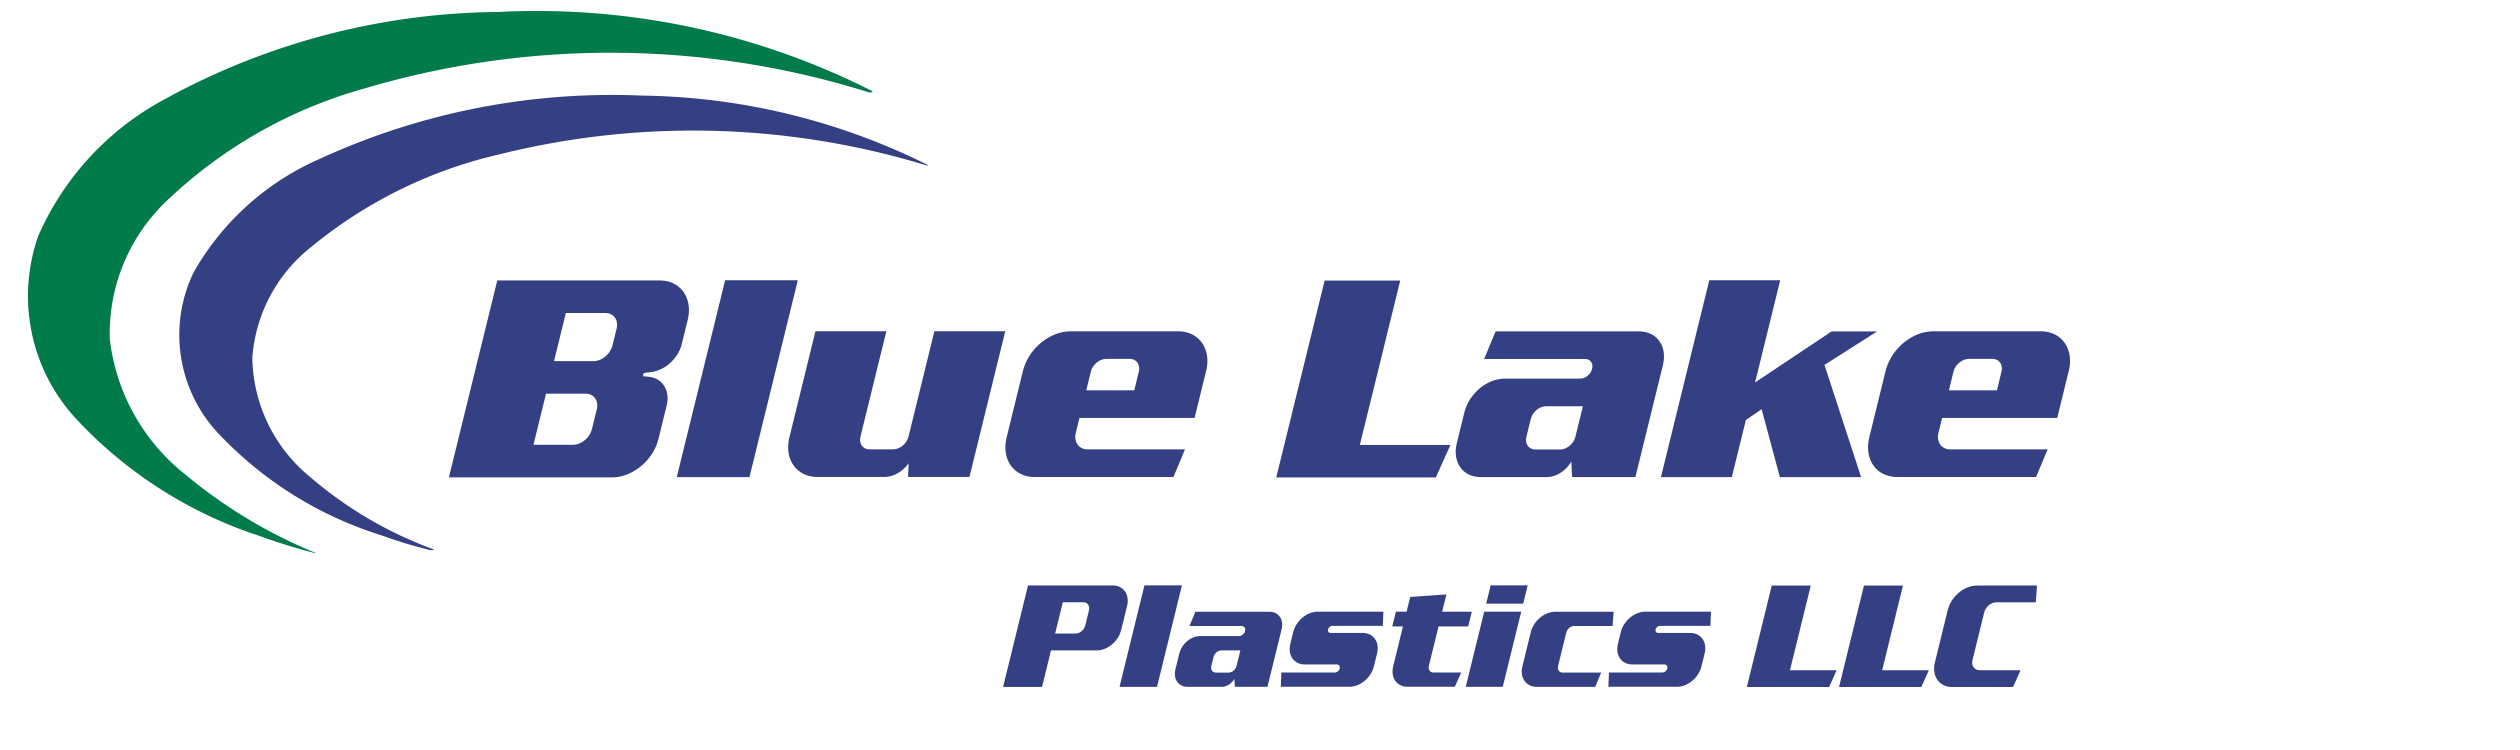 Blue Lake Plastics LLC